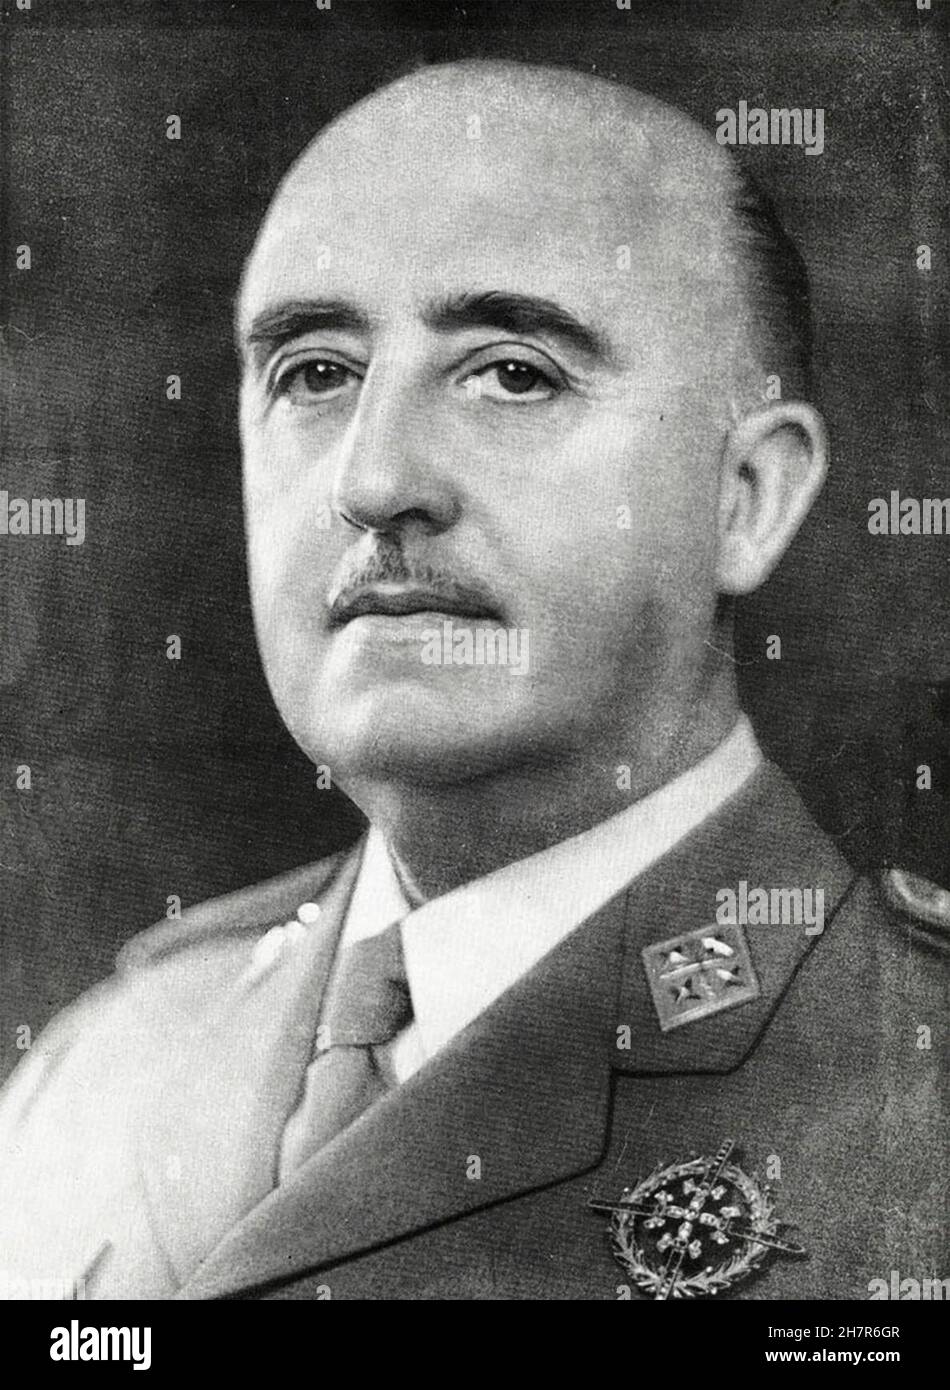 Portrait of Francisco Franco Stock Photo